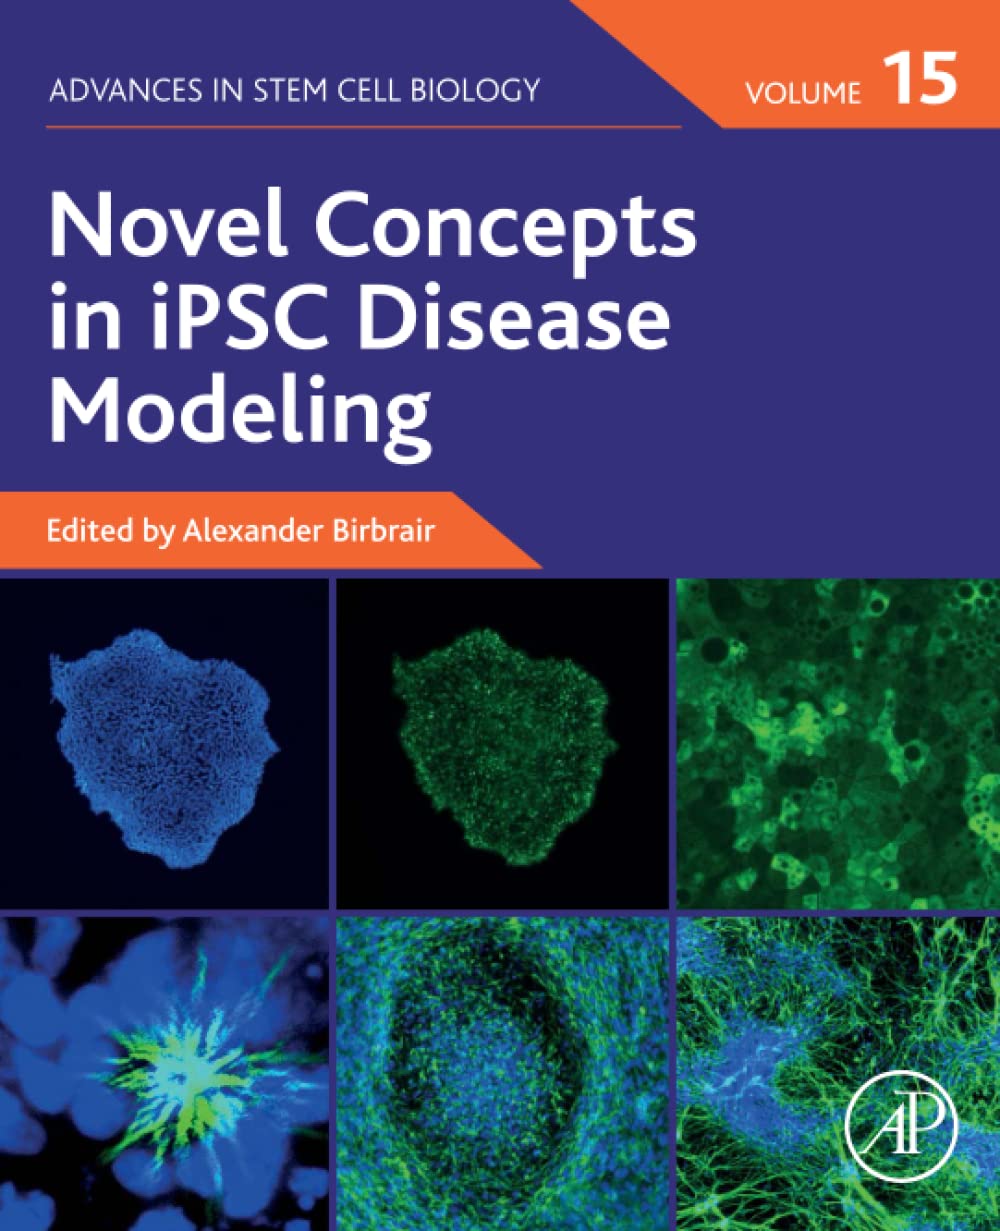 Novel Concepts in iPSC Disease Modeling (Volume 15) (Advances in Stem Cell Biology, Volume 15) 1st Edition by Alexander Birbrair 